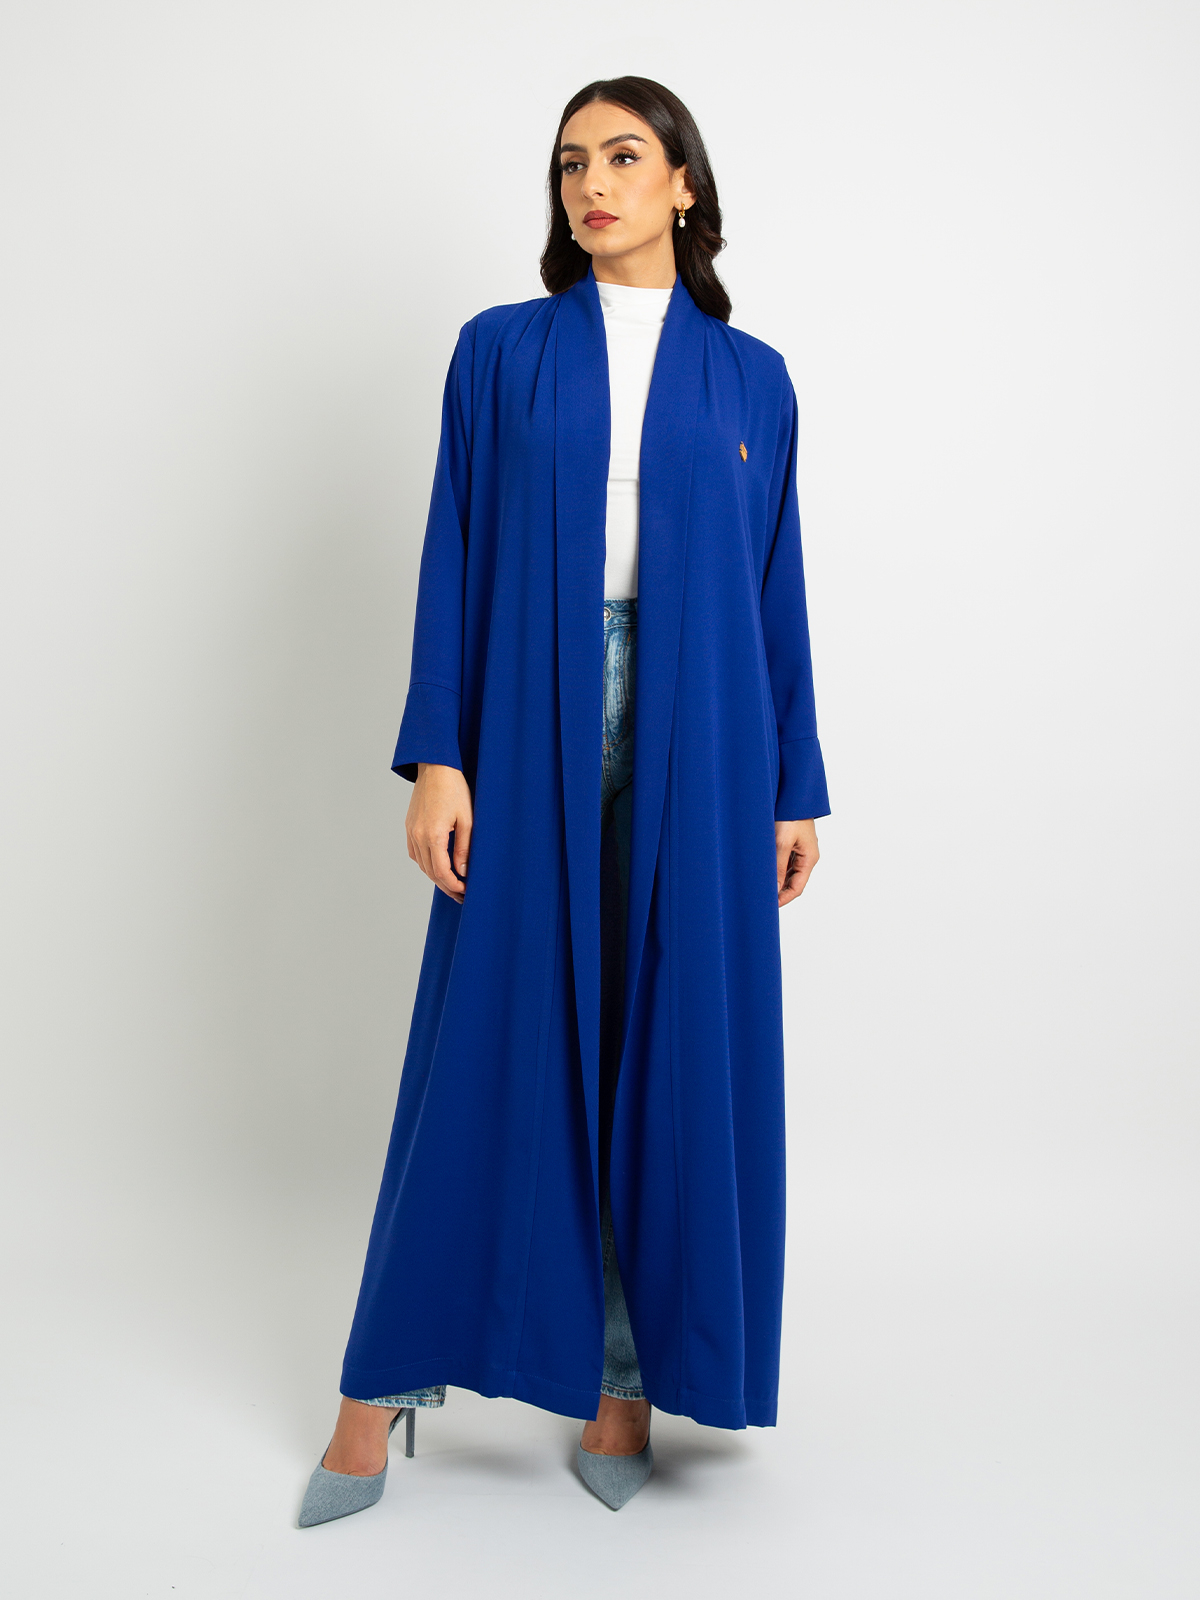 Indigo Blue - Long Open Practical Abaya in Crepe Fabric